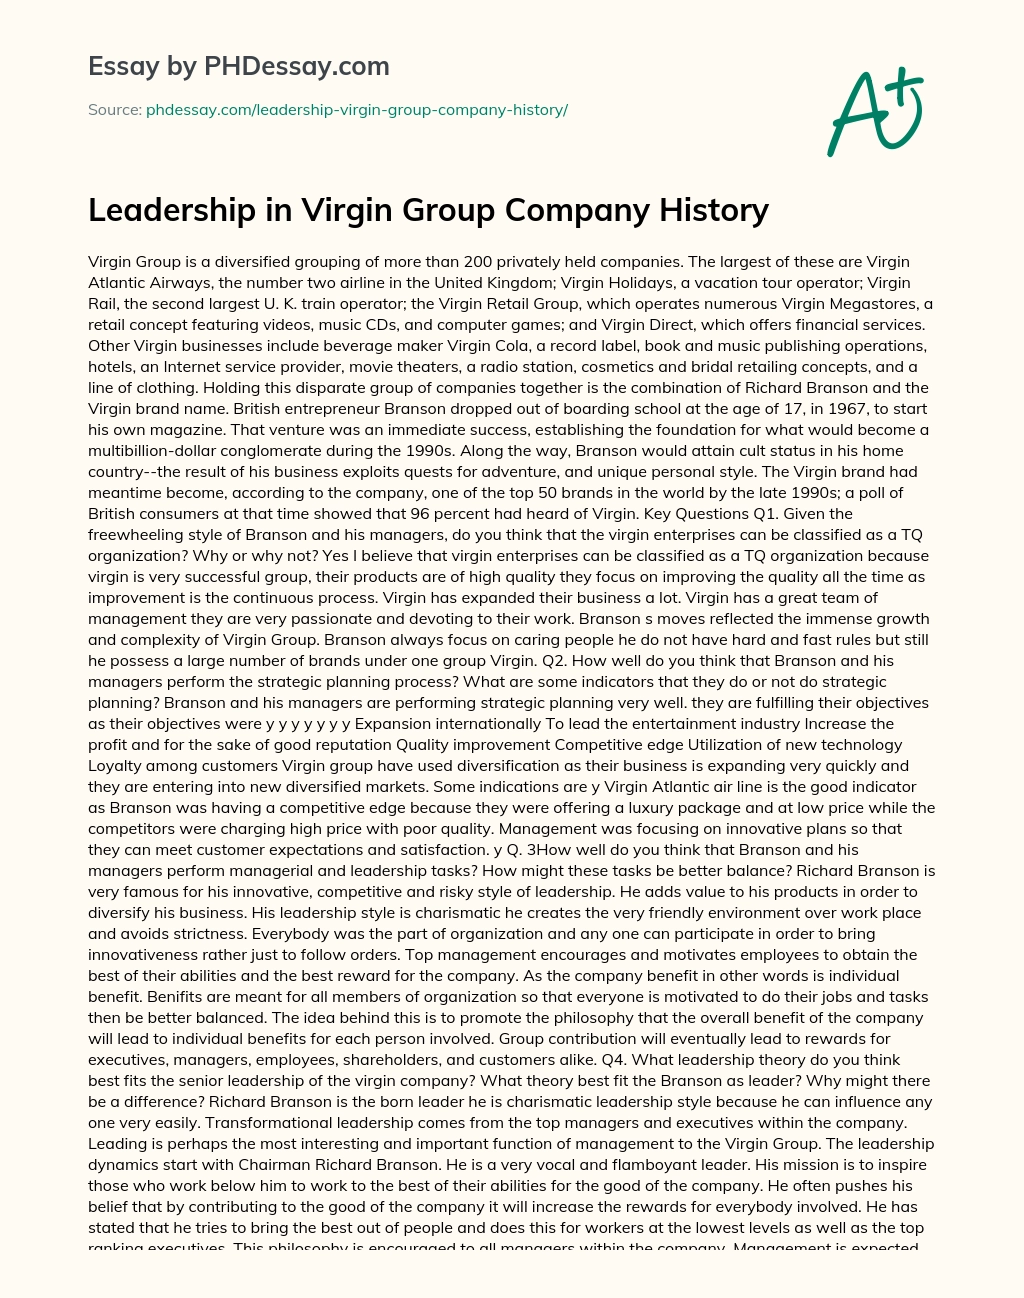 Leadership in Virgin Group Company History essay